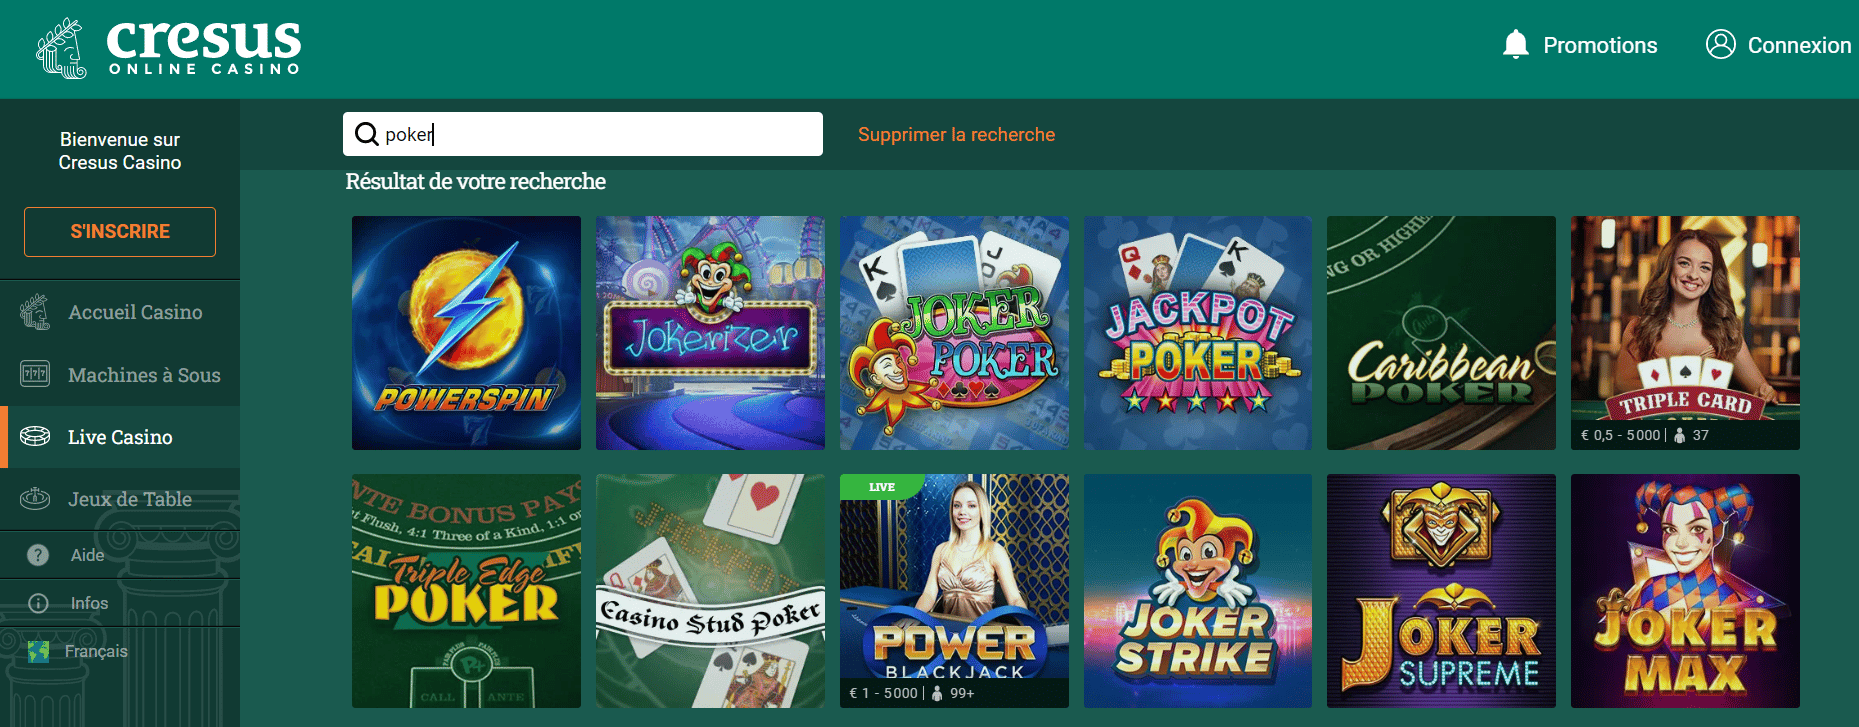 Meilleurs sites de poker en ligne : Cresus Casino